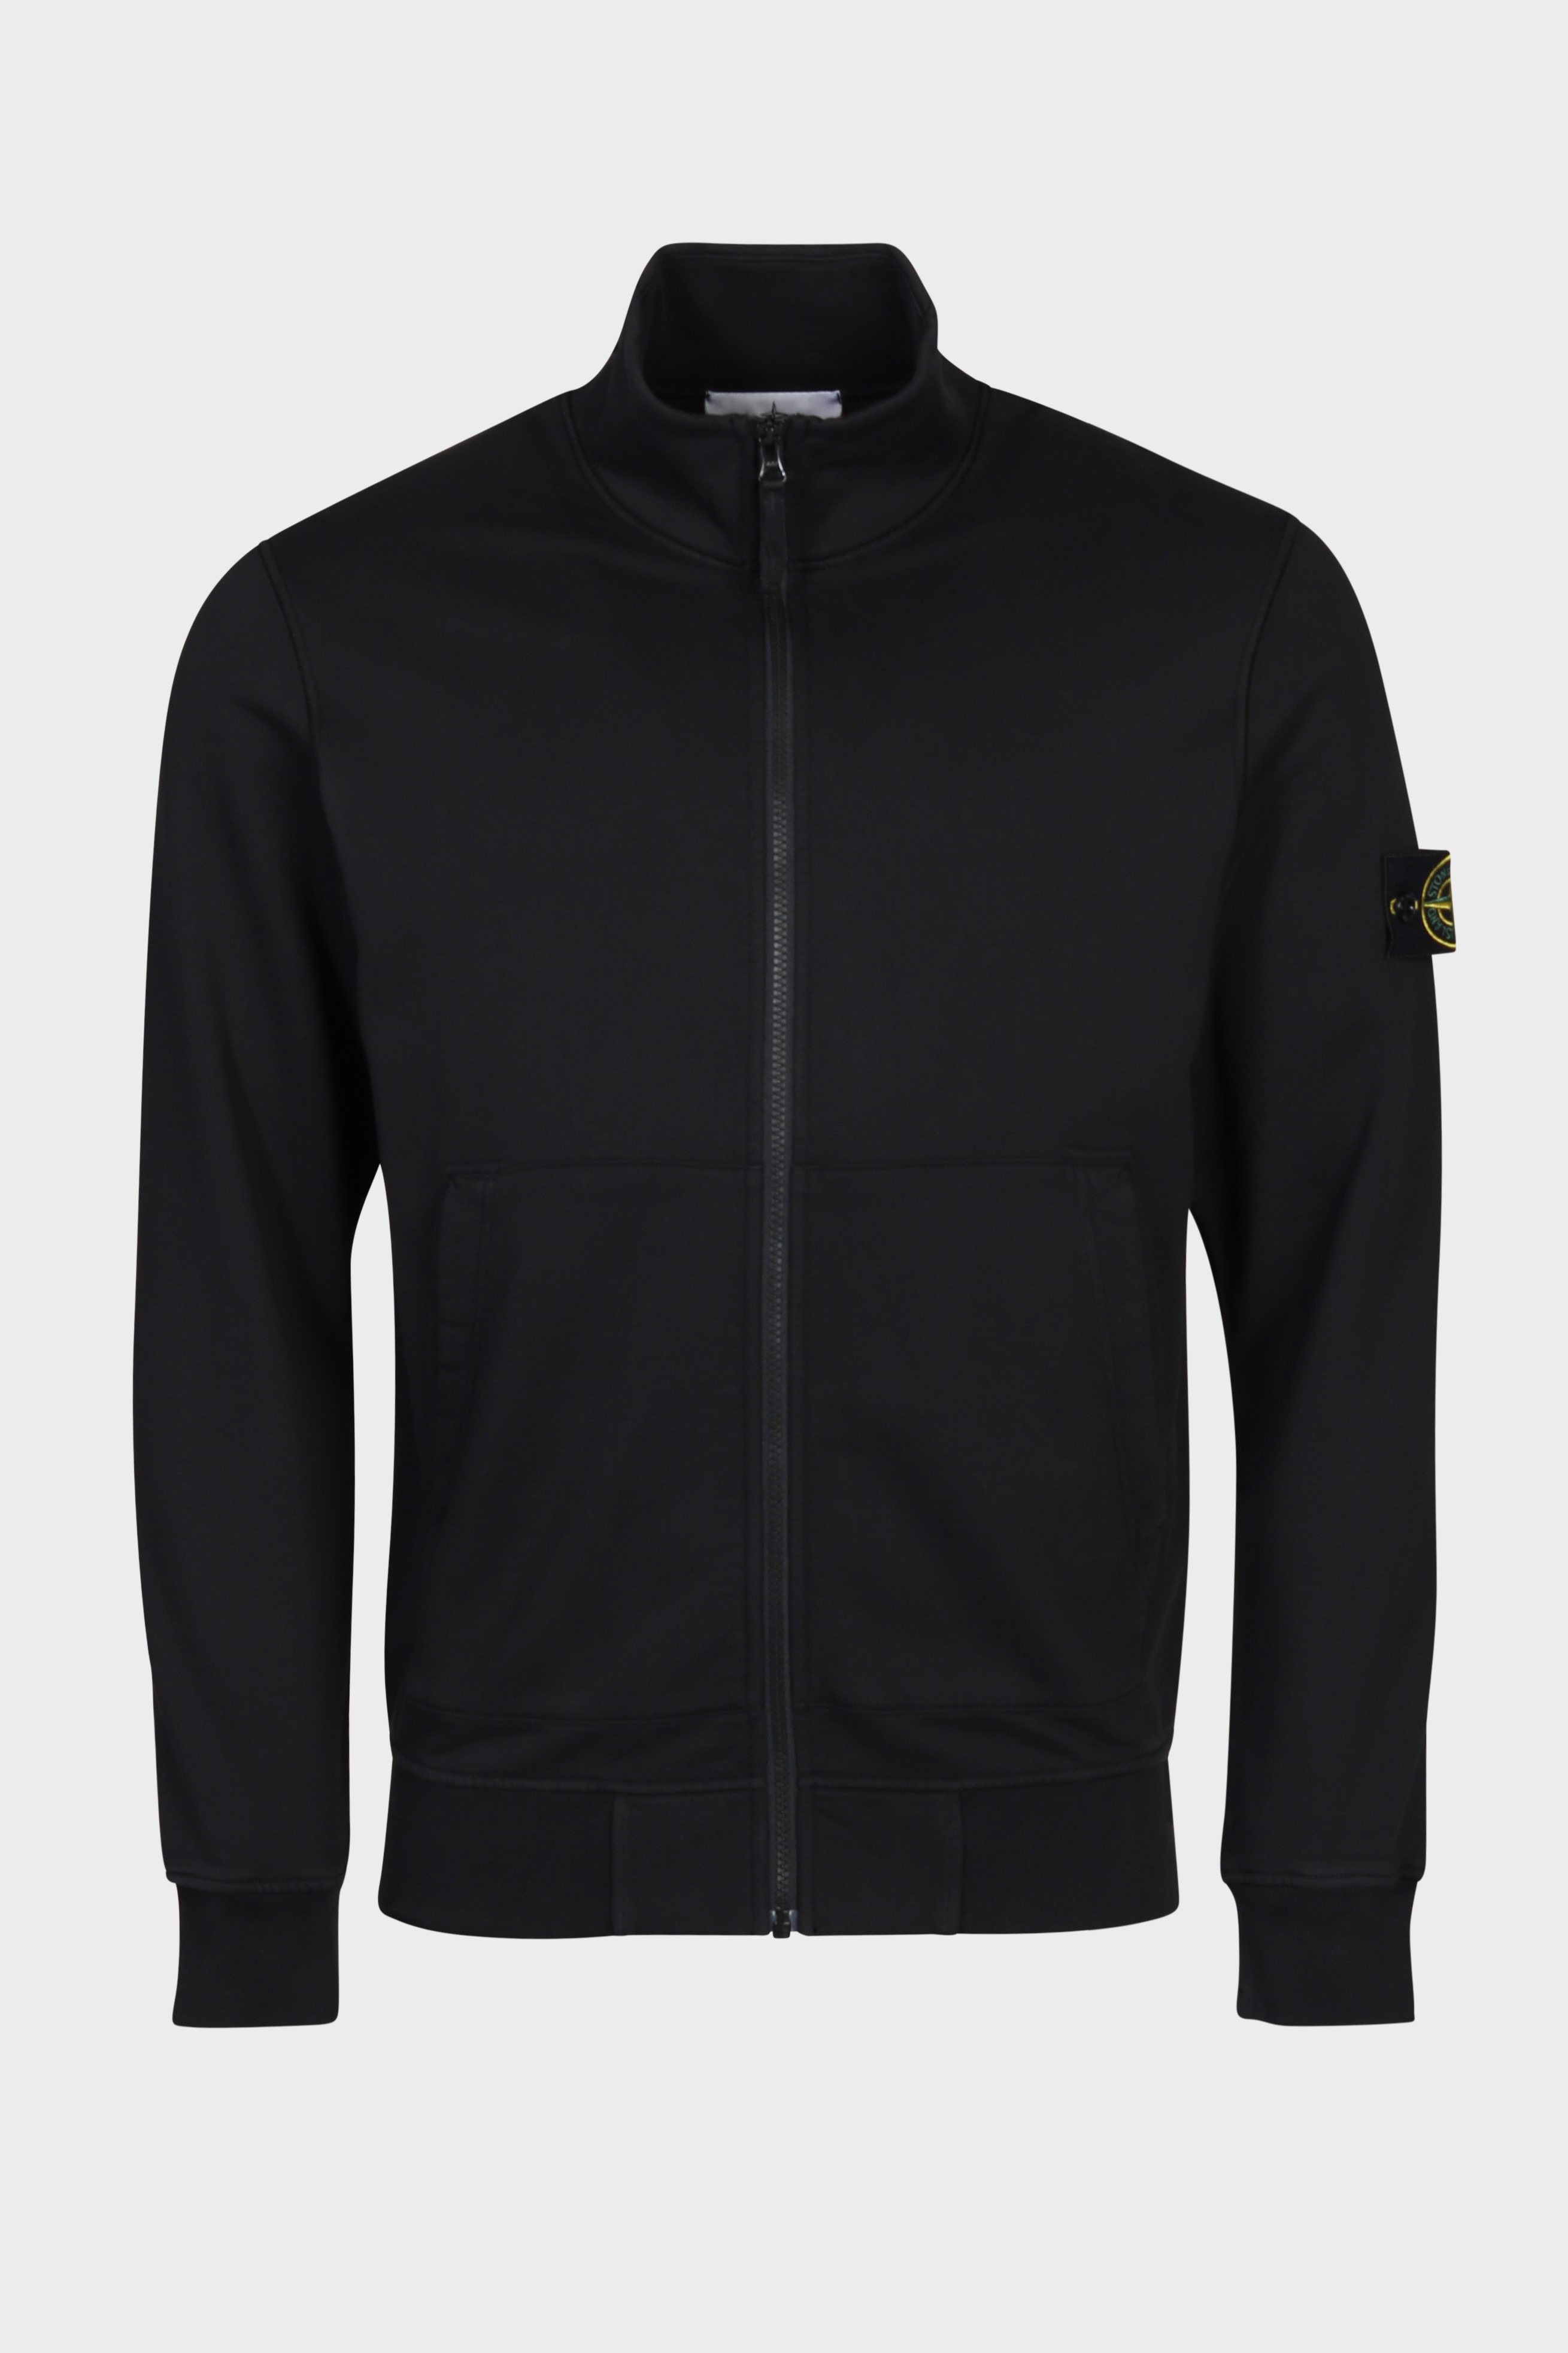 STONE ISLAND Zip Sweatshirt in Black